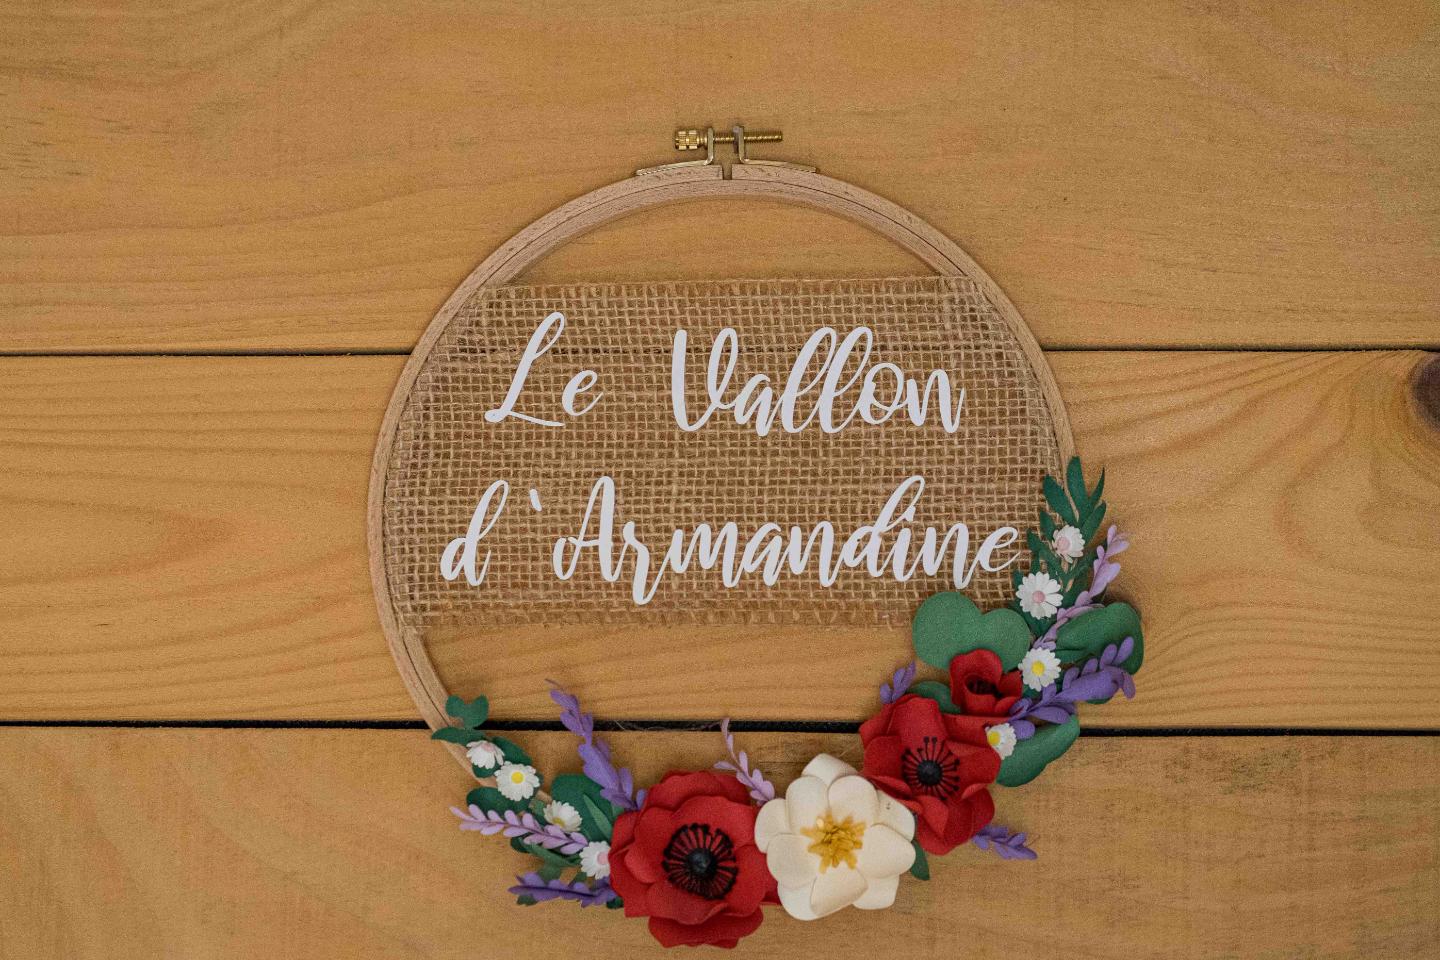 Logement GreenGo: Le Vallon d'Armandine - Image 13